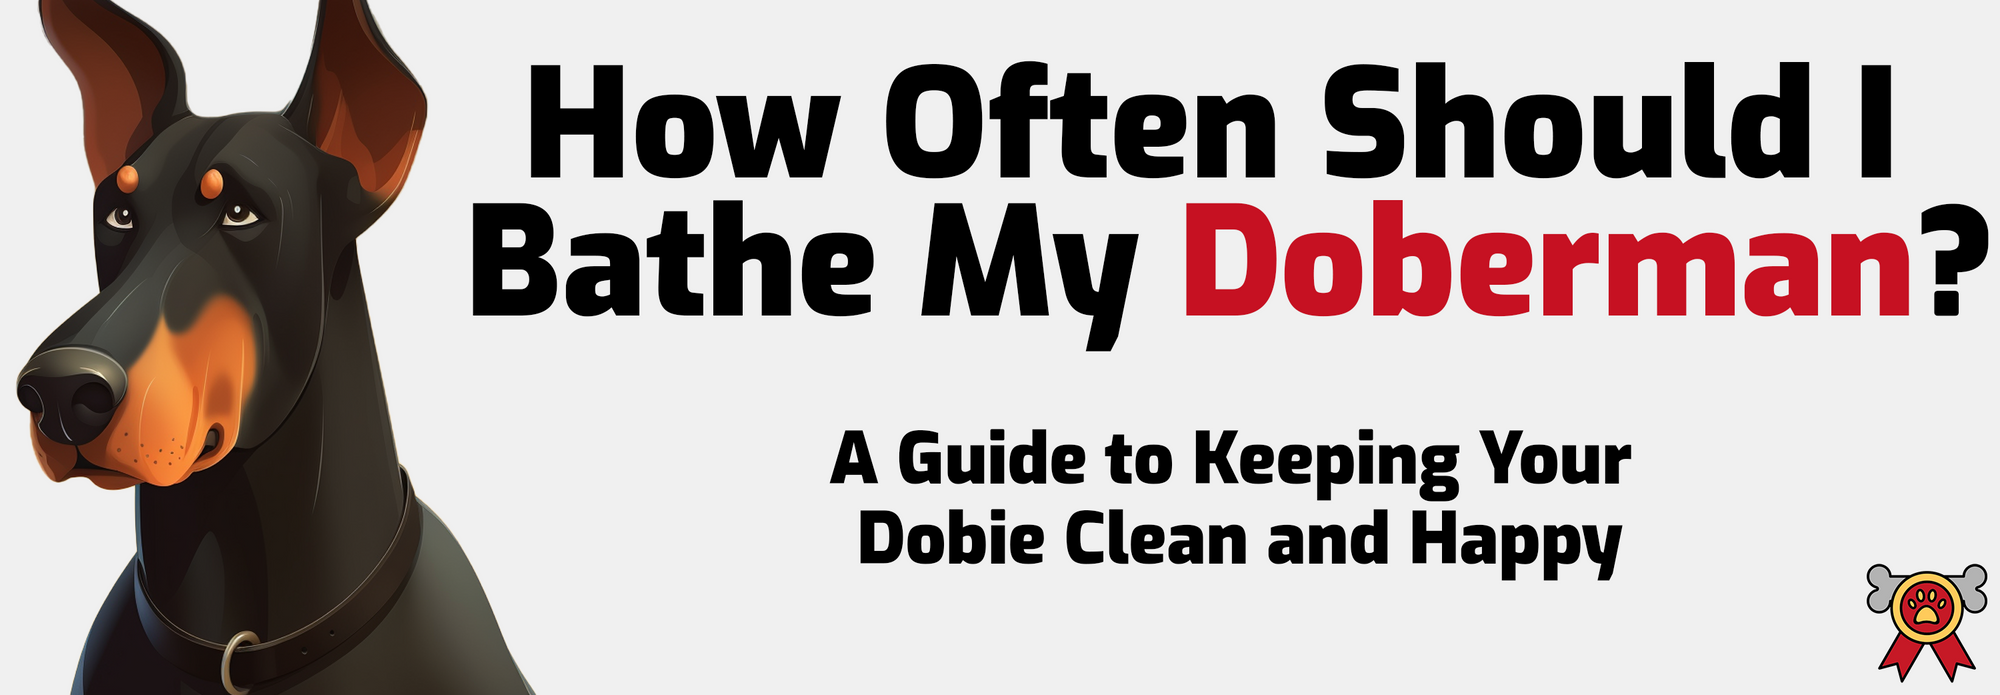 How Often Should I Bathe My Doberman